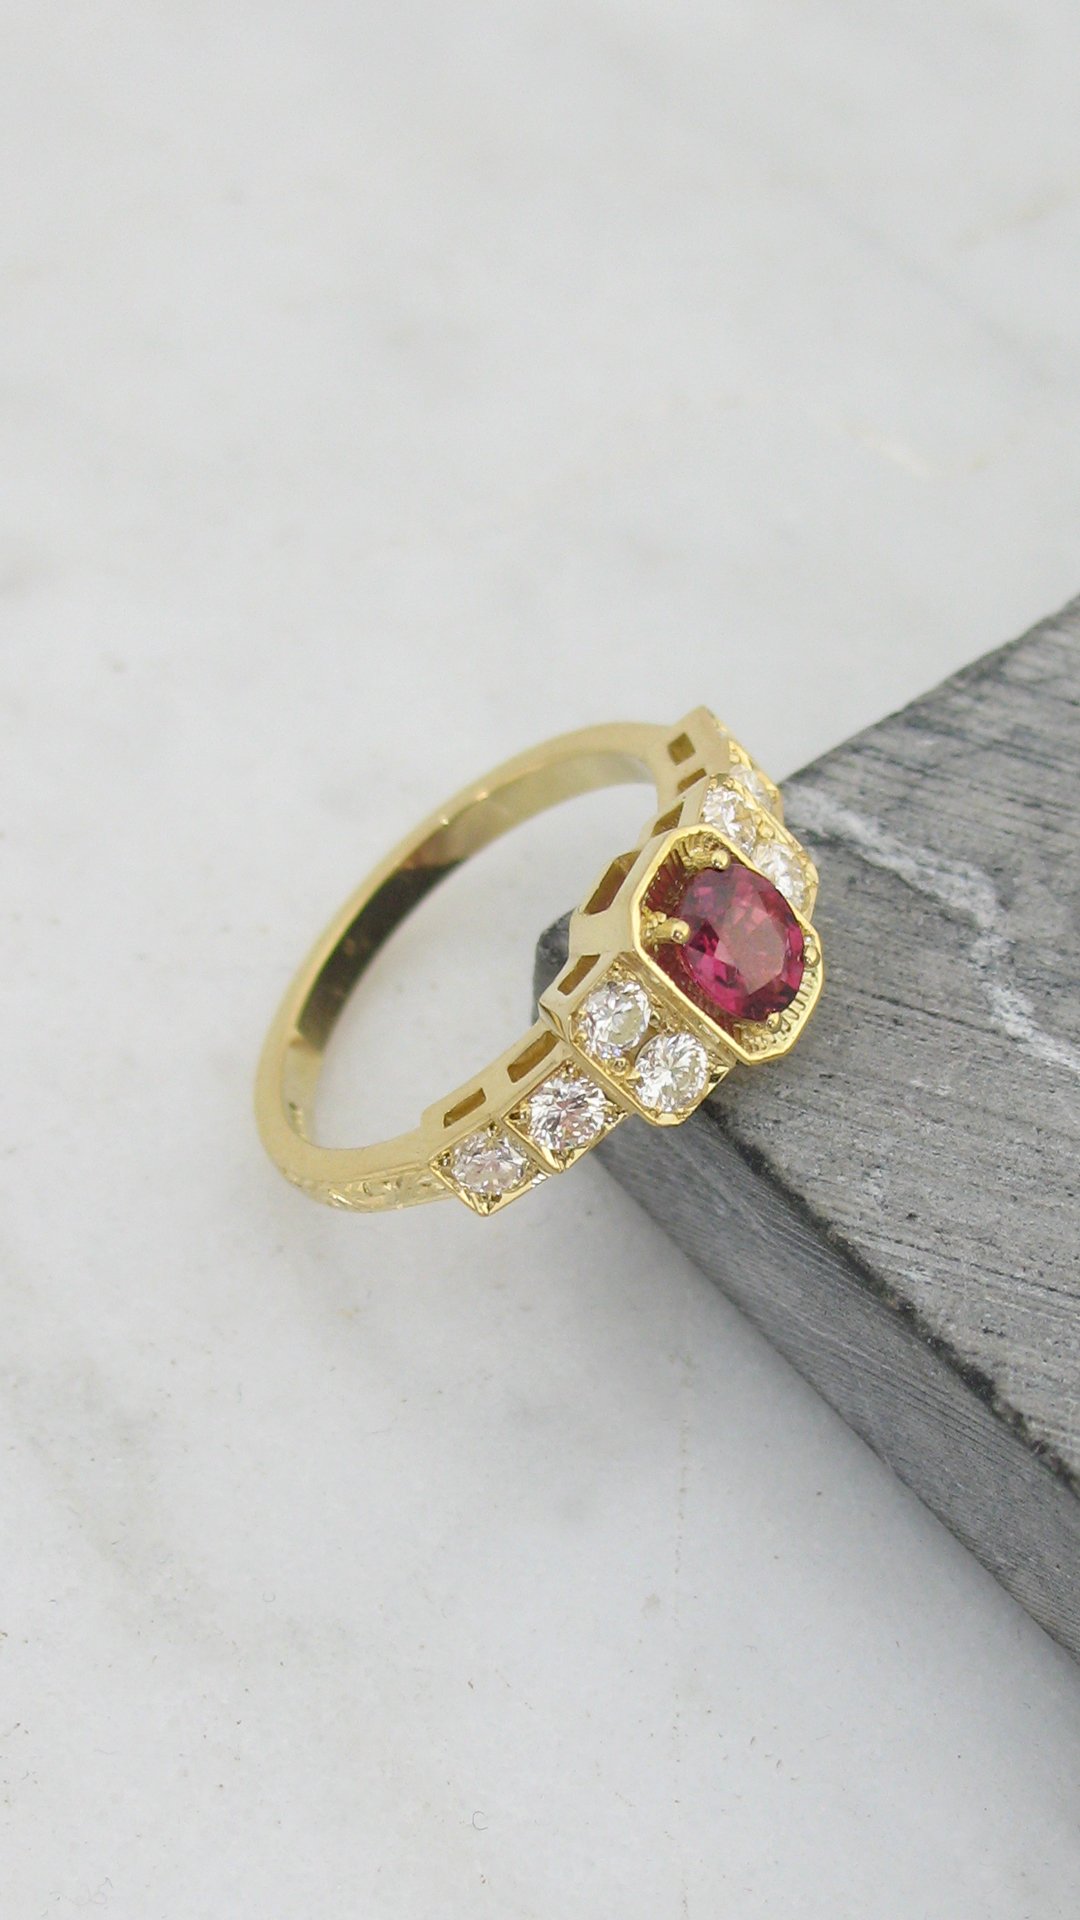 An incredible Art Deco inspired bespoke ruby ring